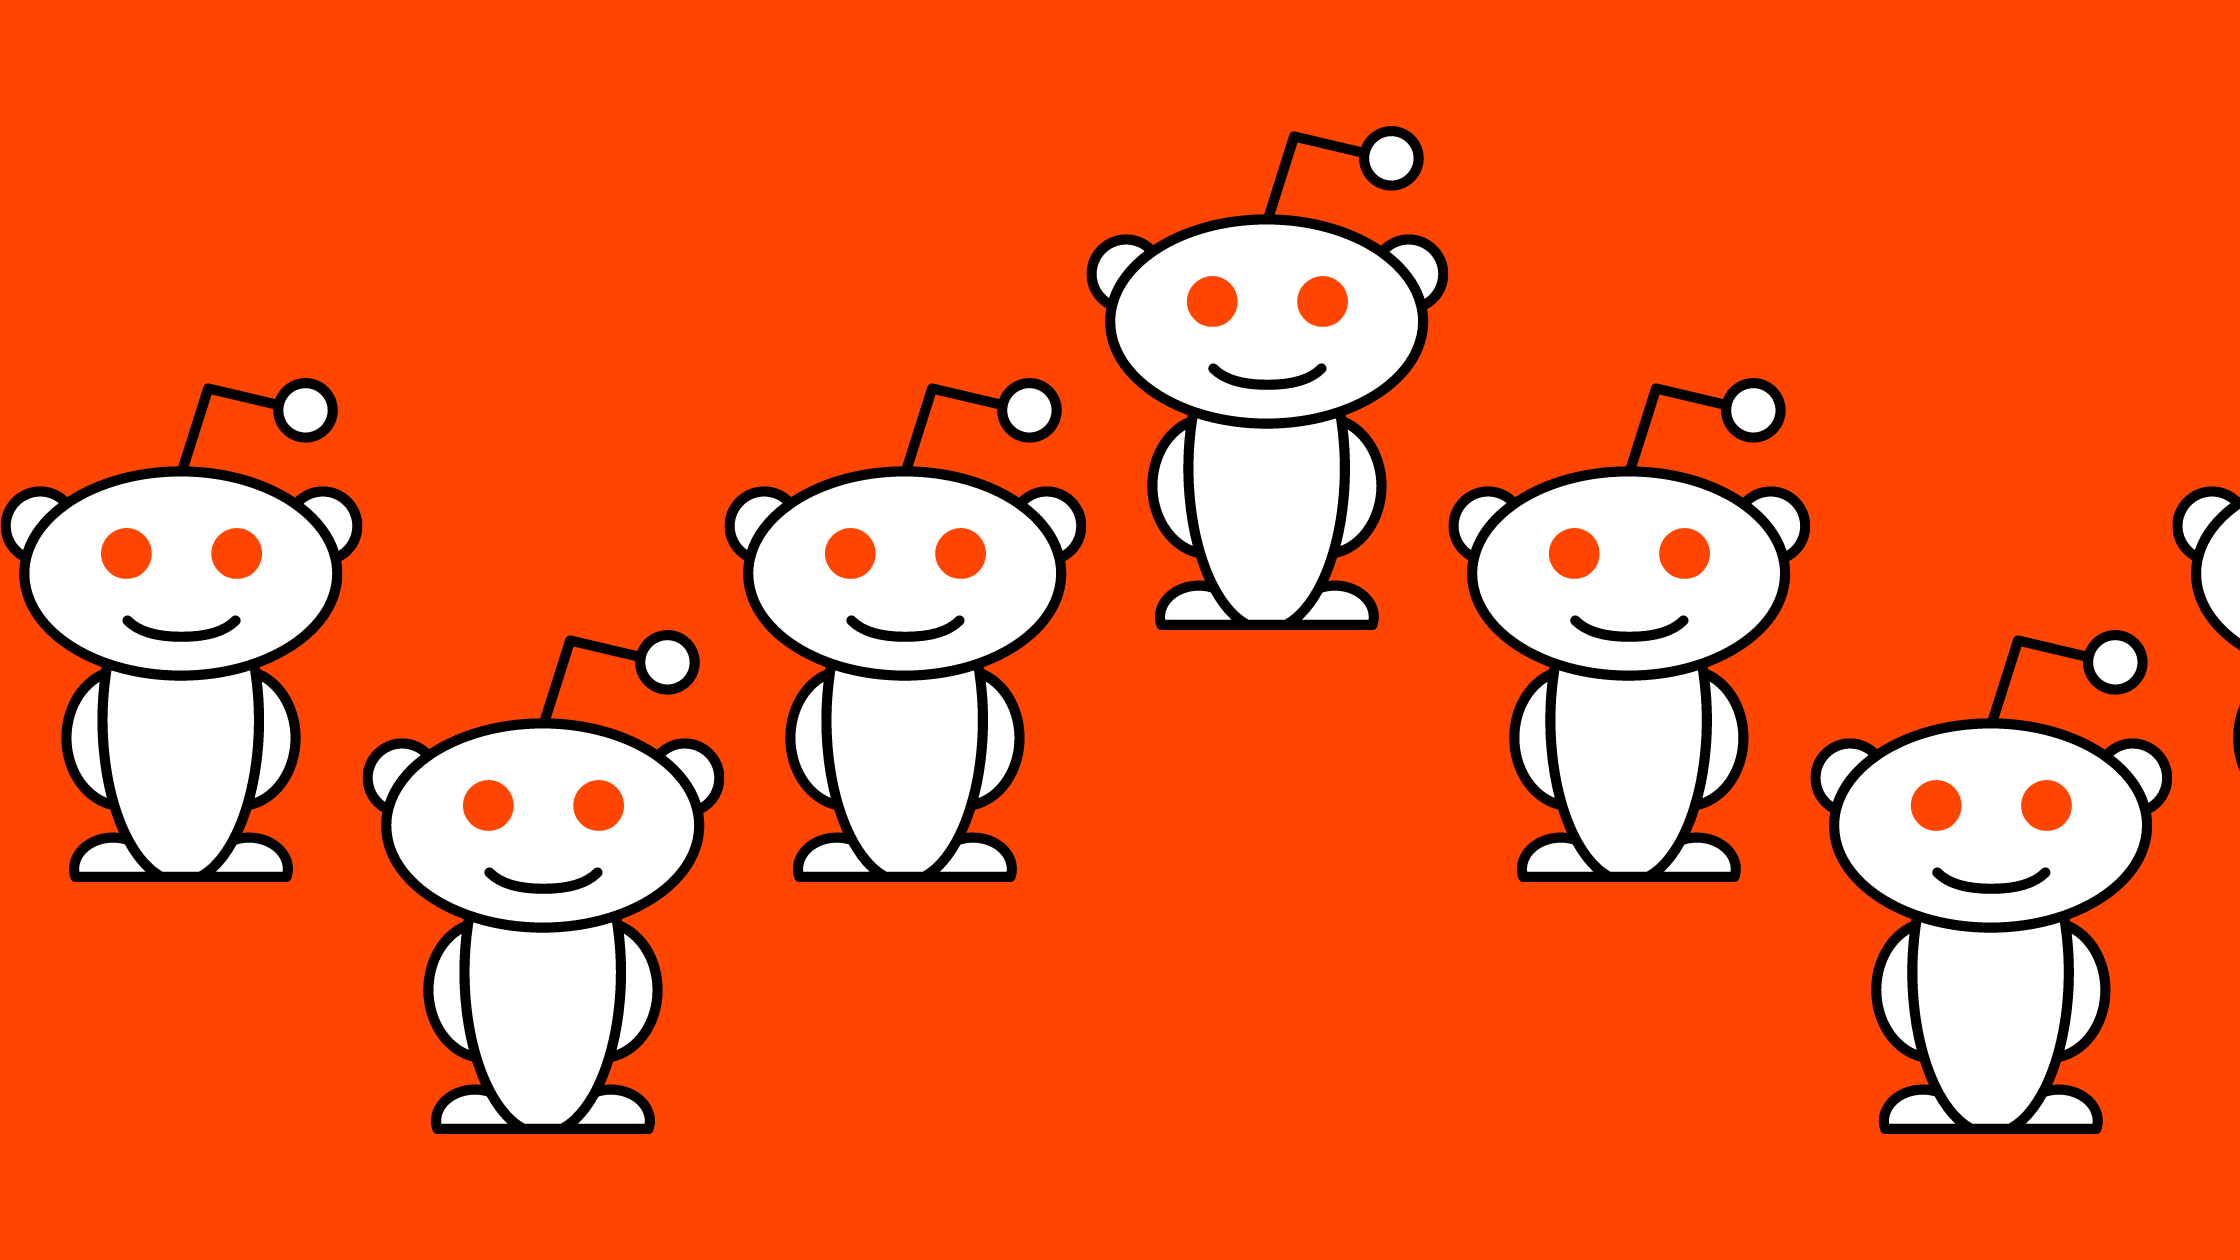 Reddit's alien mascot in a repeating pattern